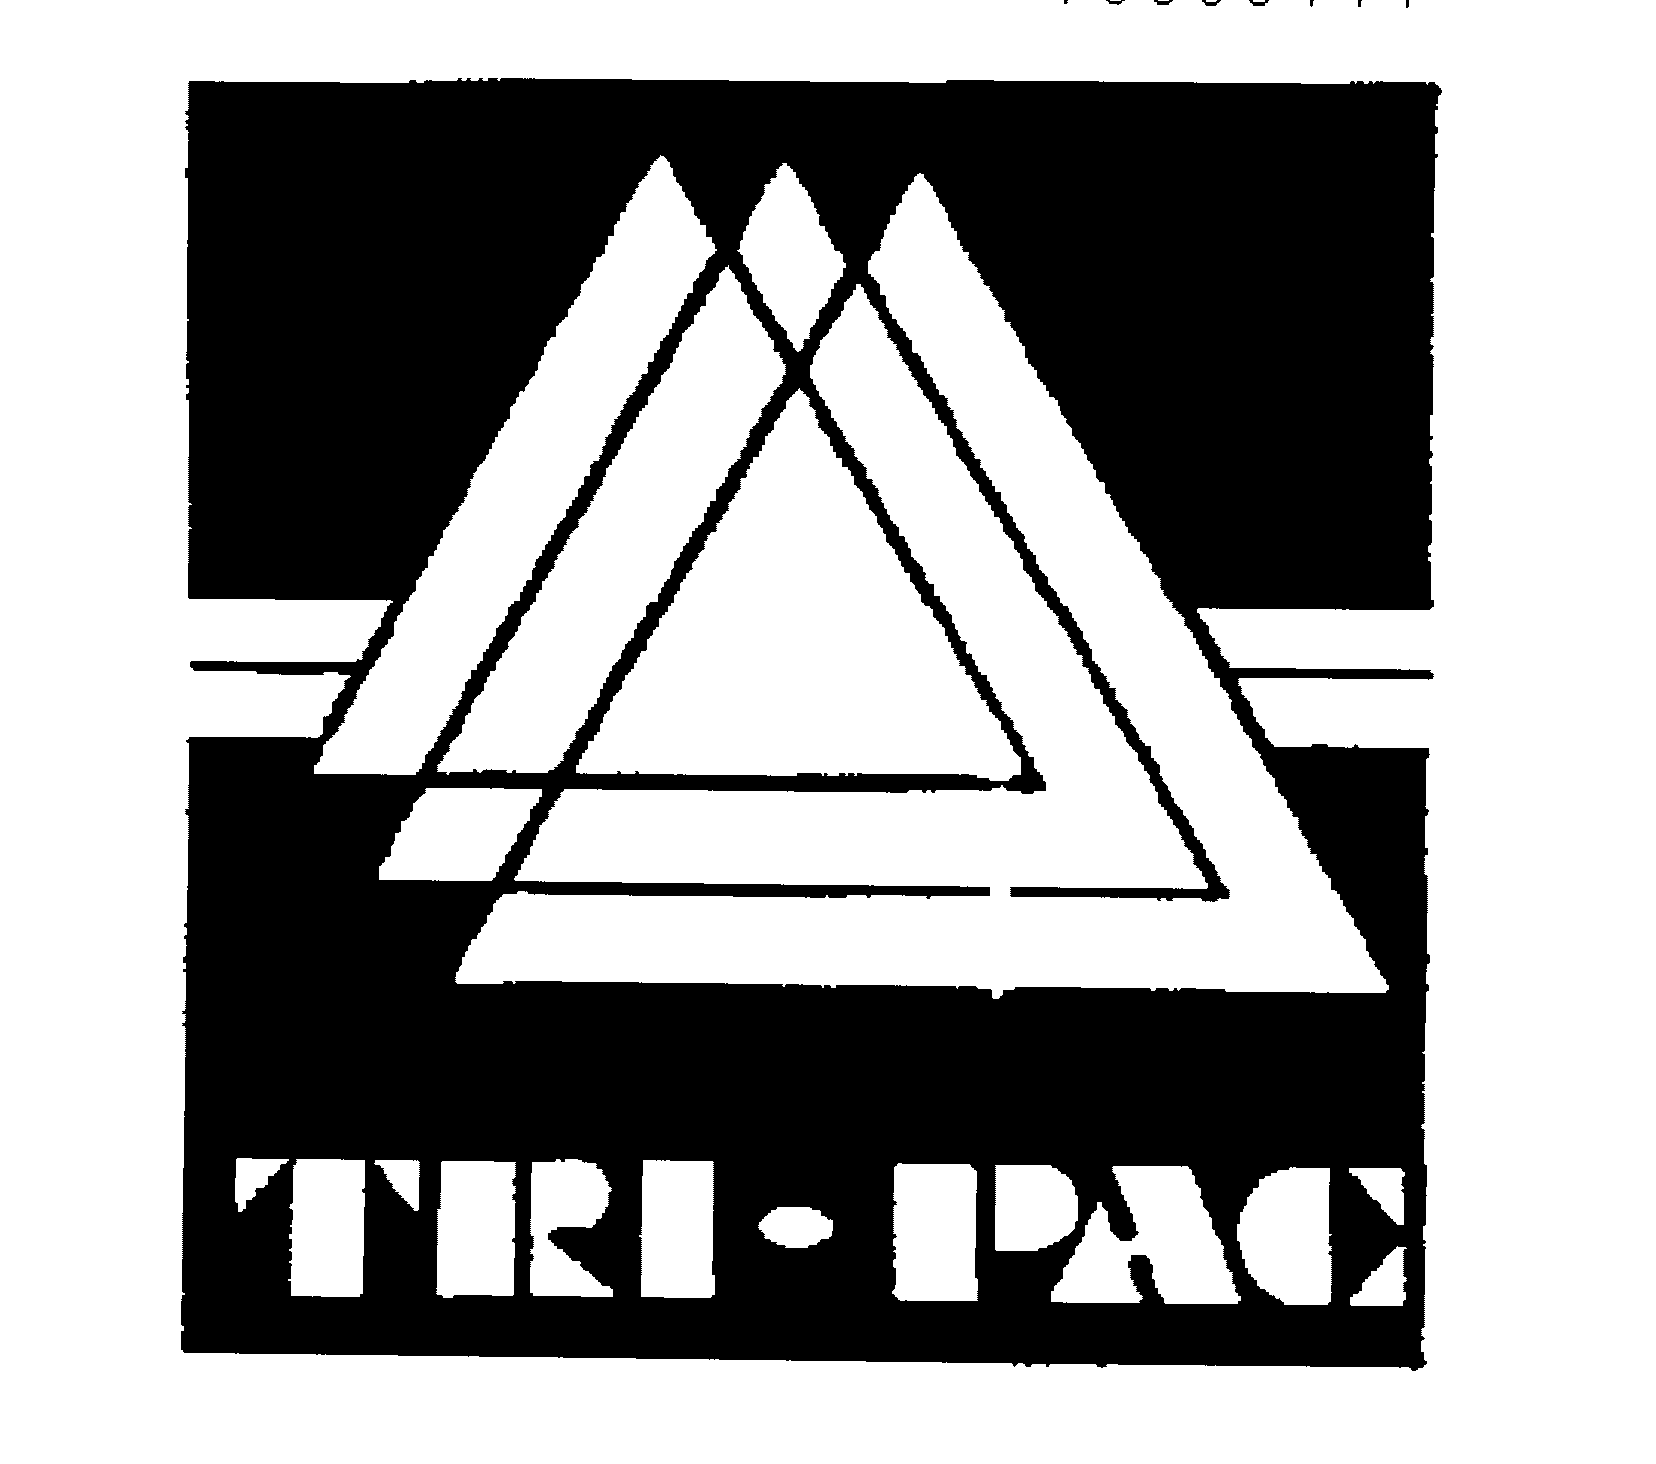 Trademark Logo TRI-PAC